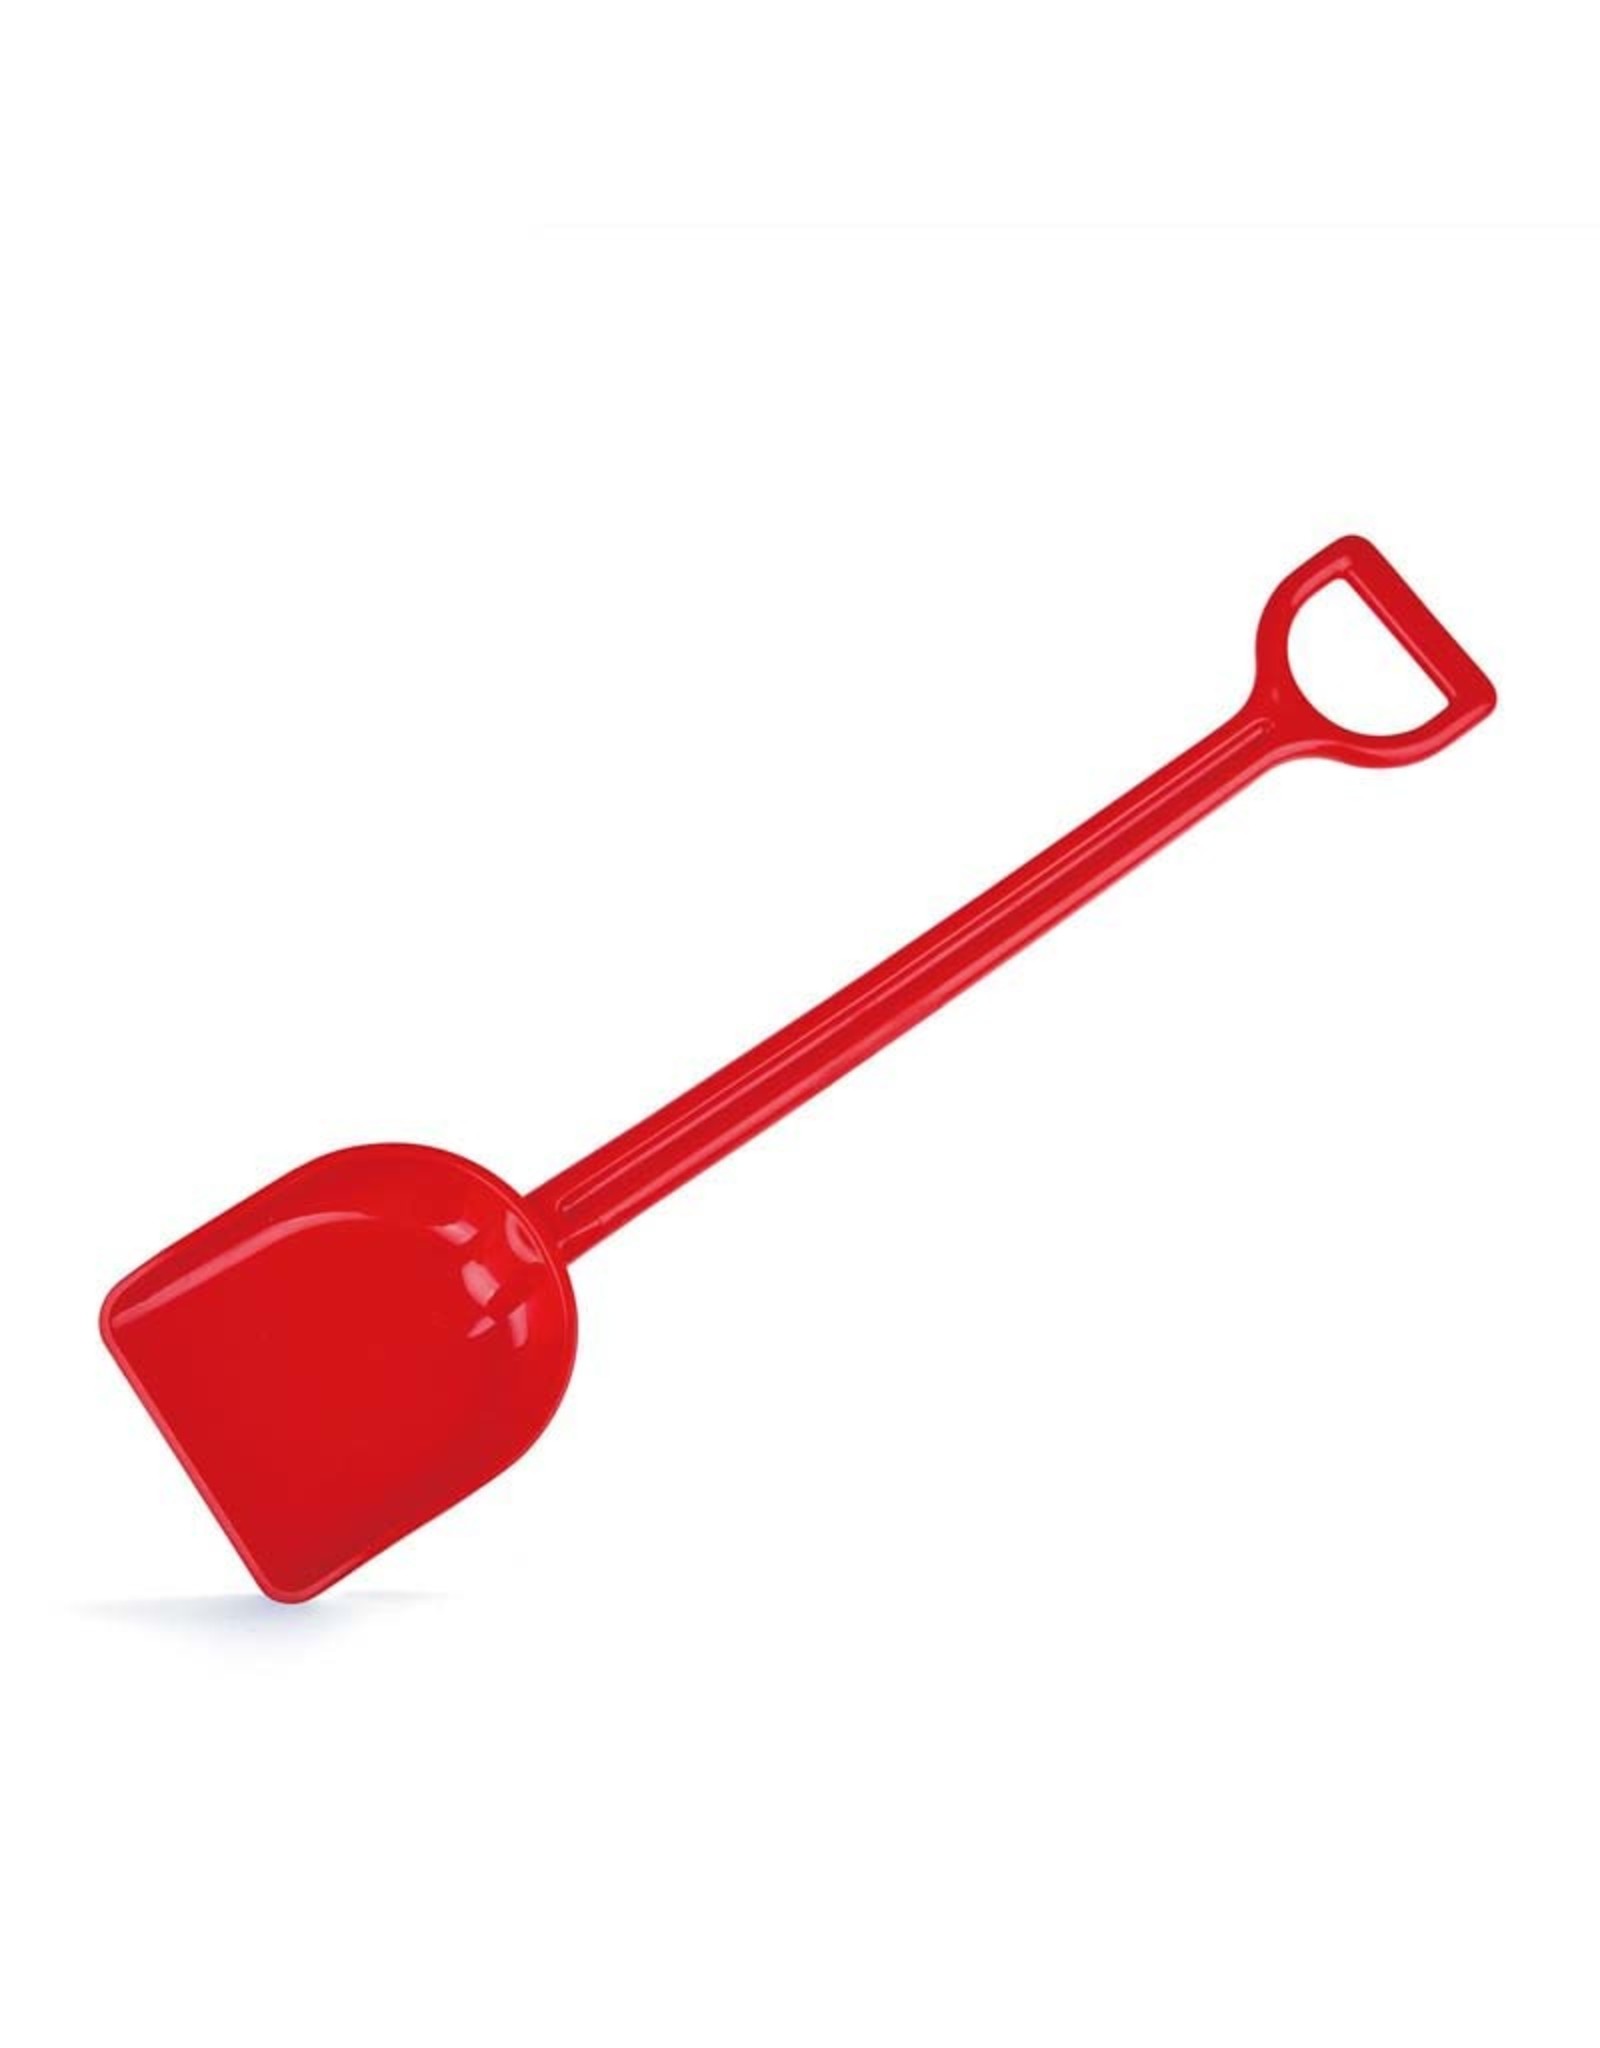 Hape Mighty Shovel Red